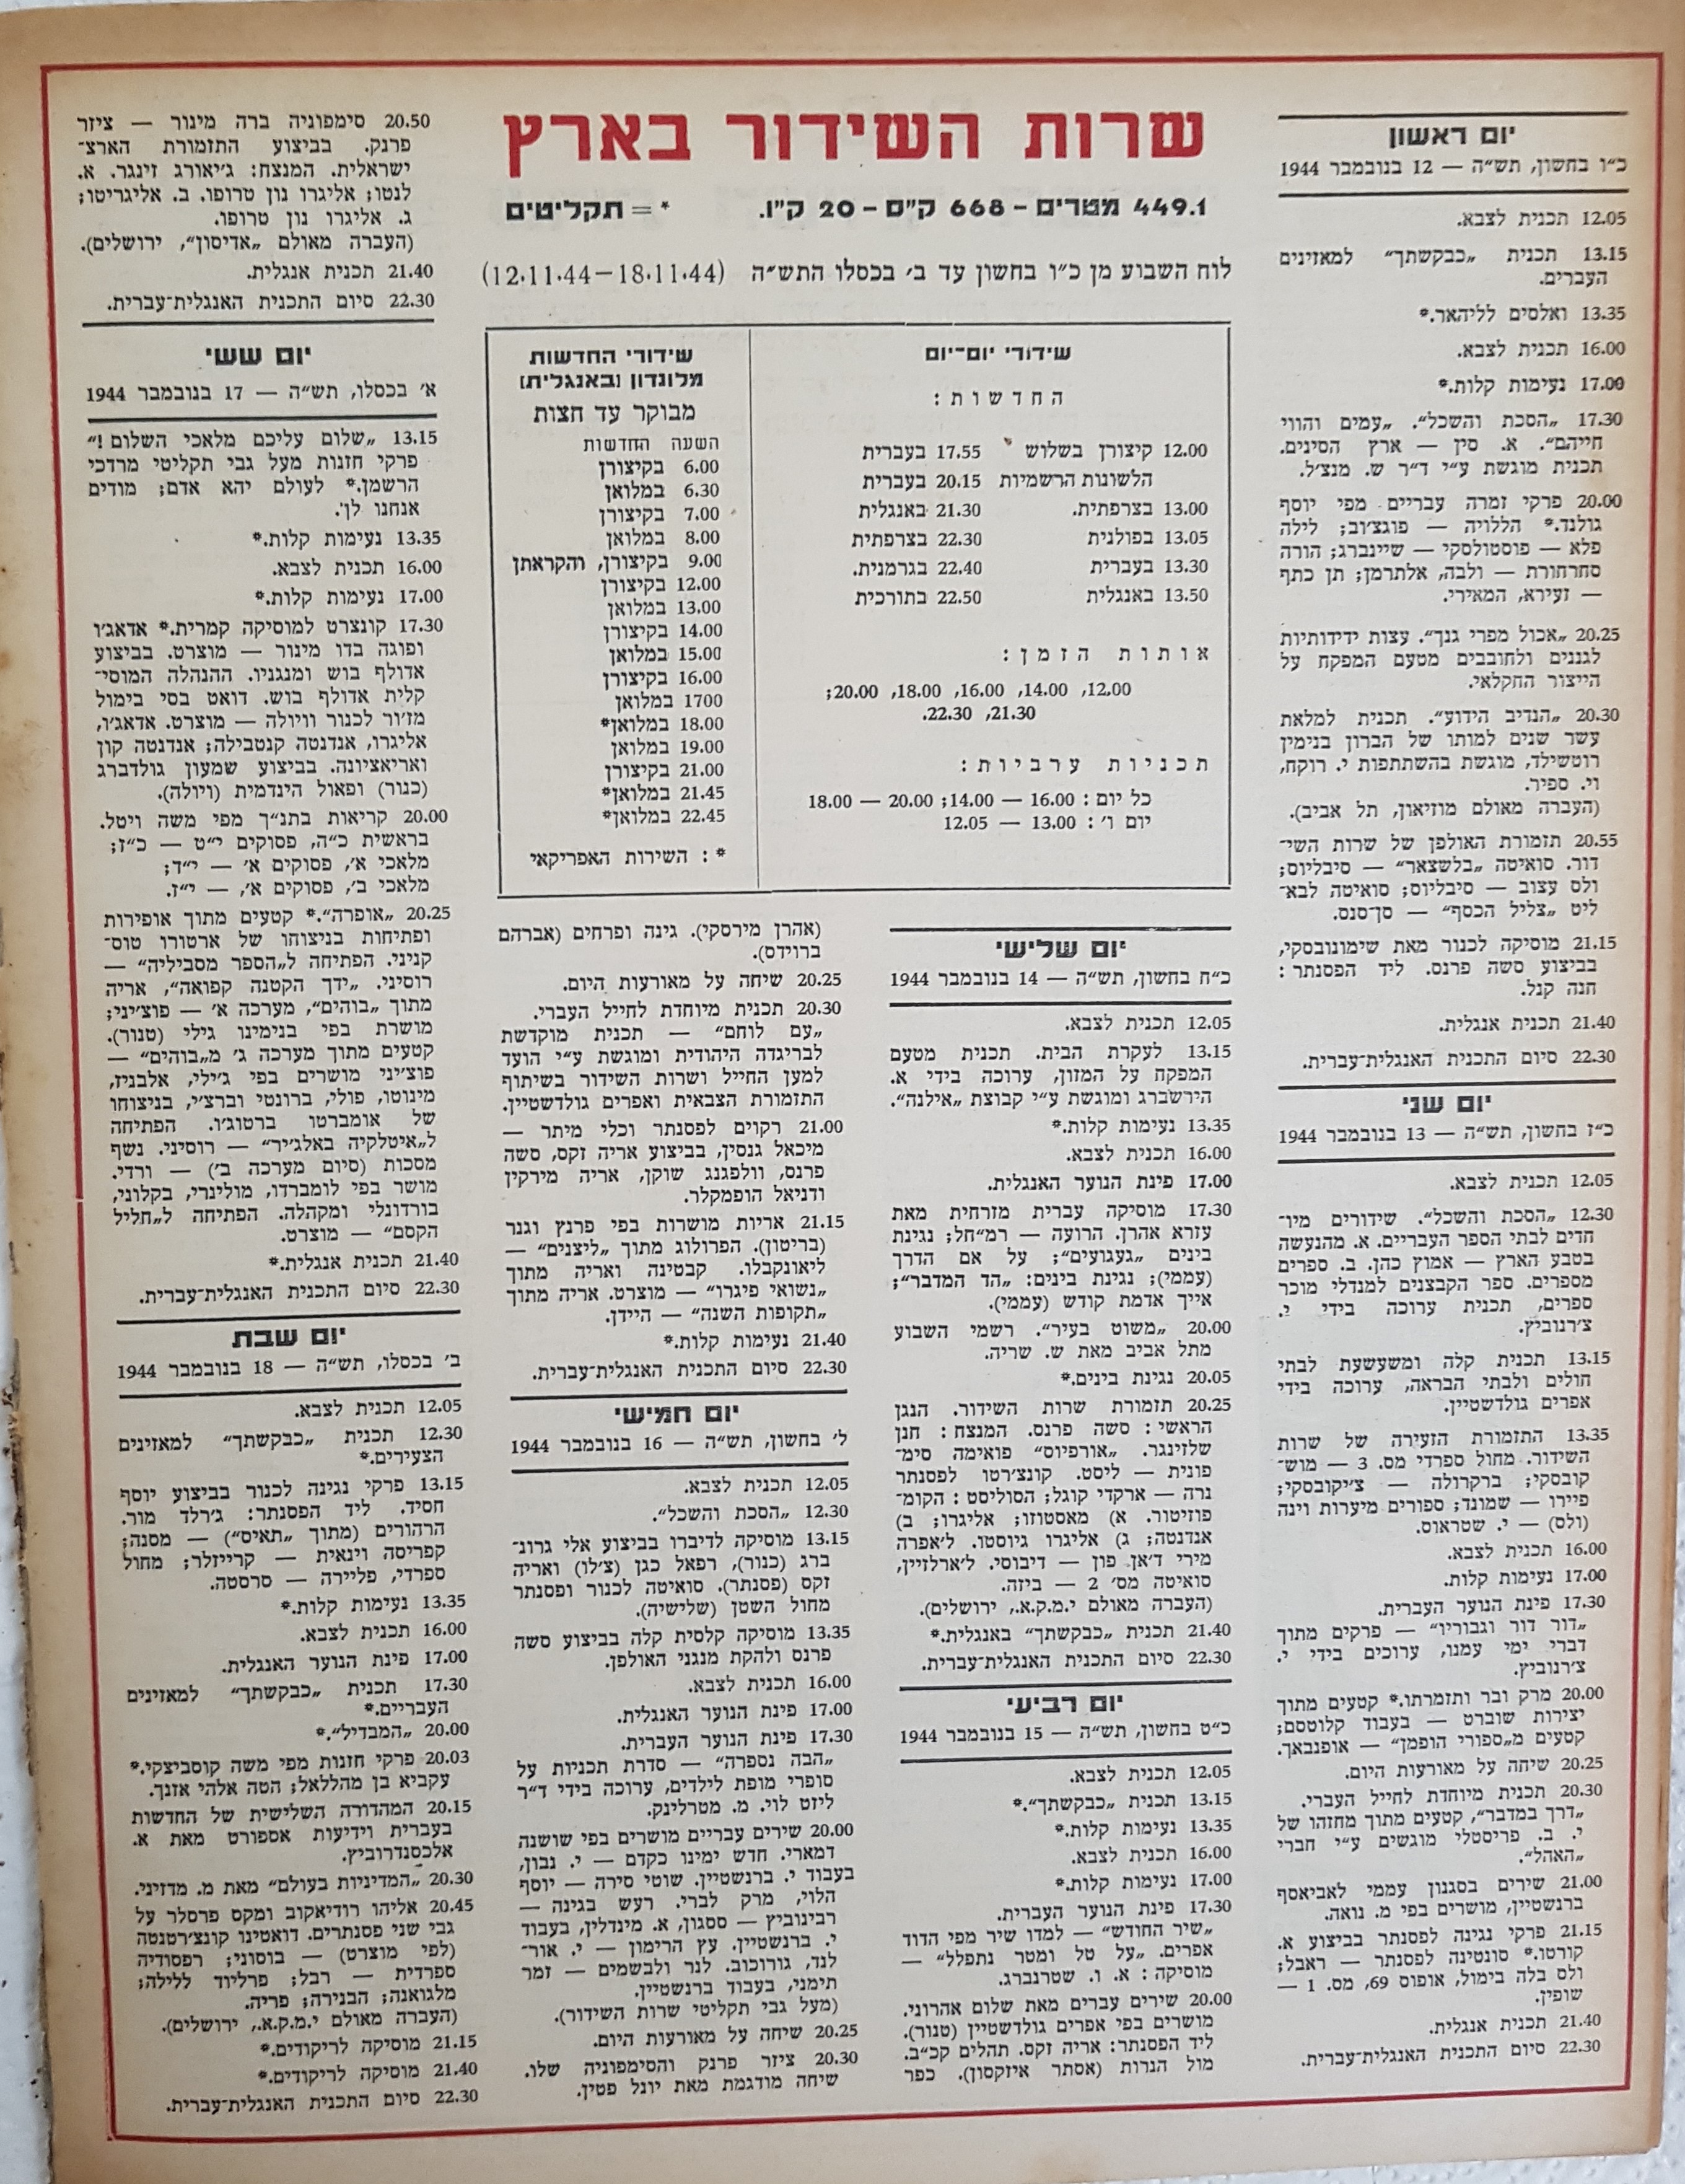 Radio Schedule: November 12 - November 18, 1944